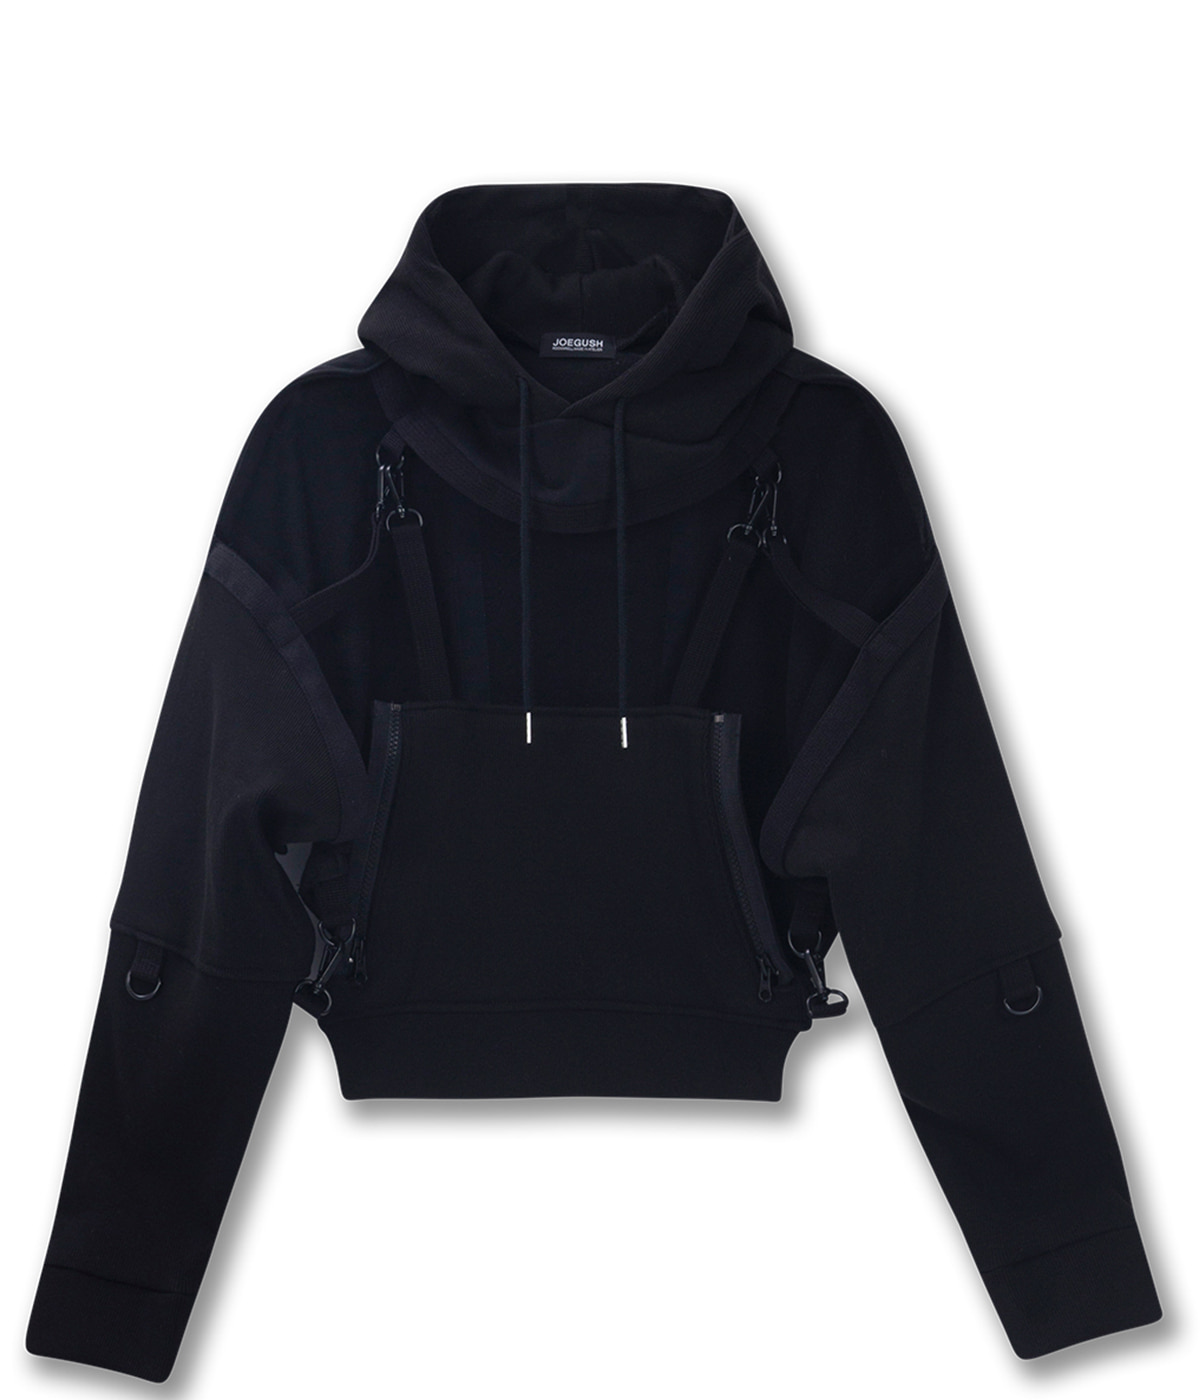 Cut out hoodie (Black) - Exclusive